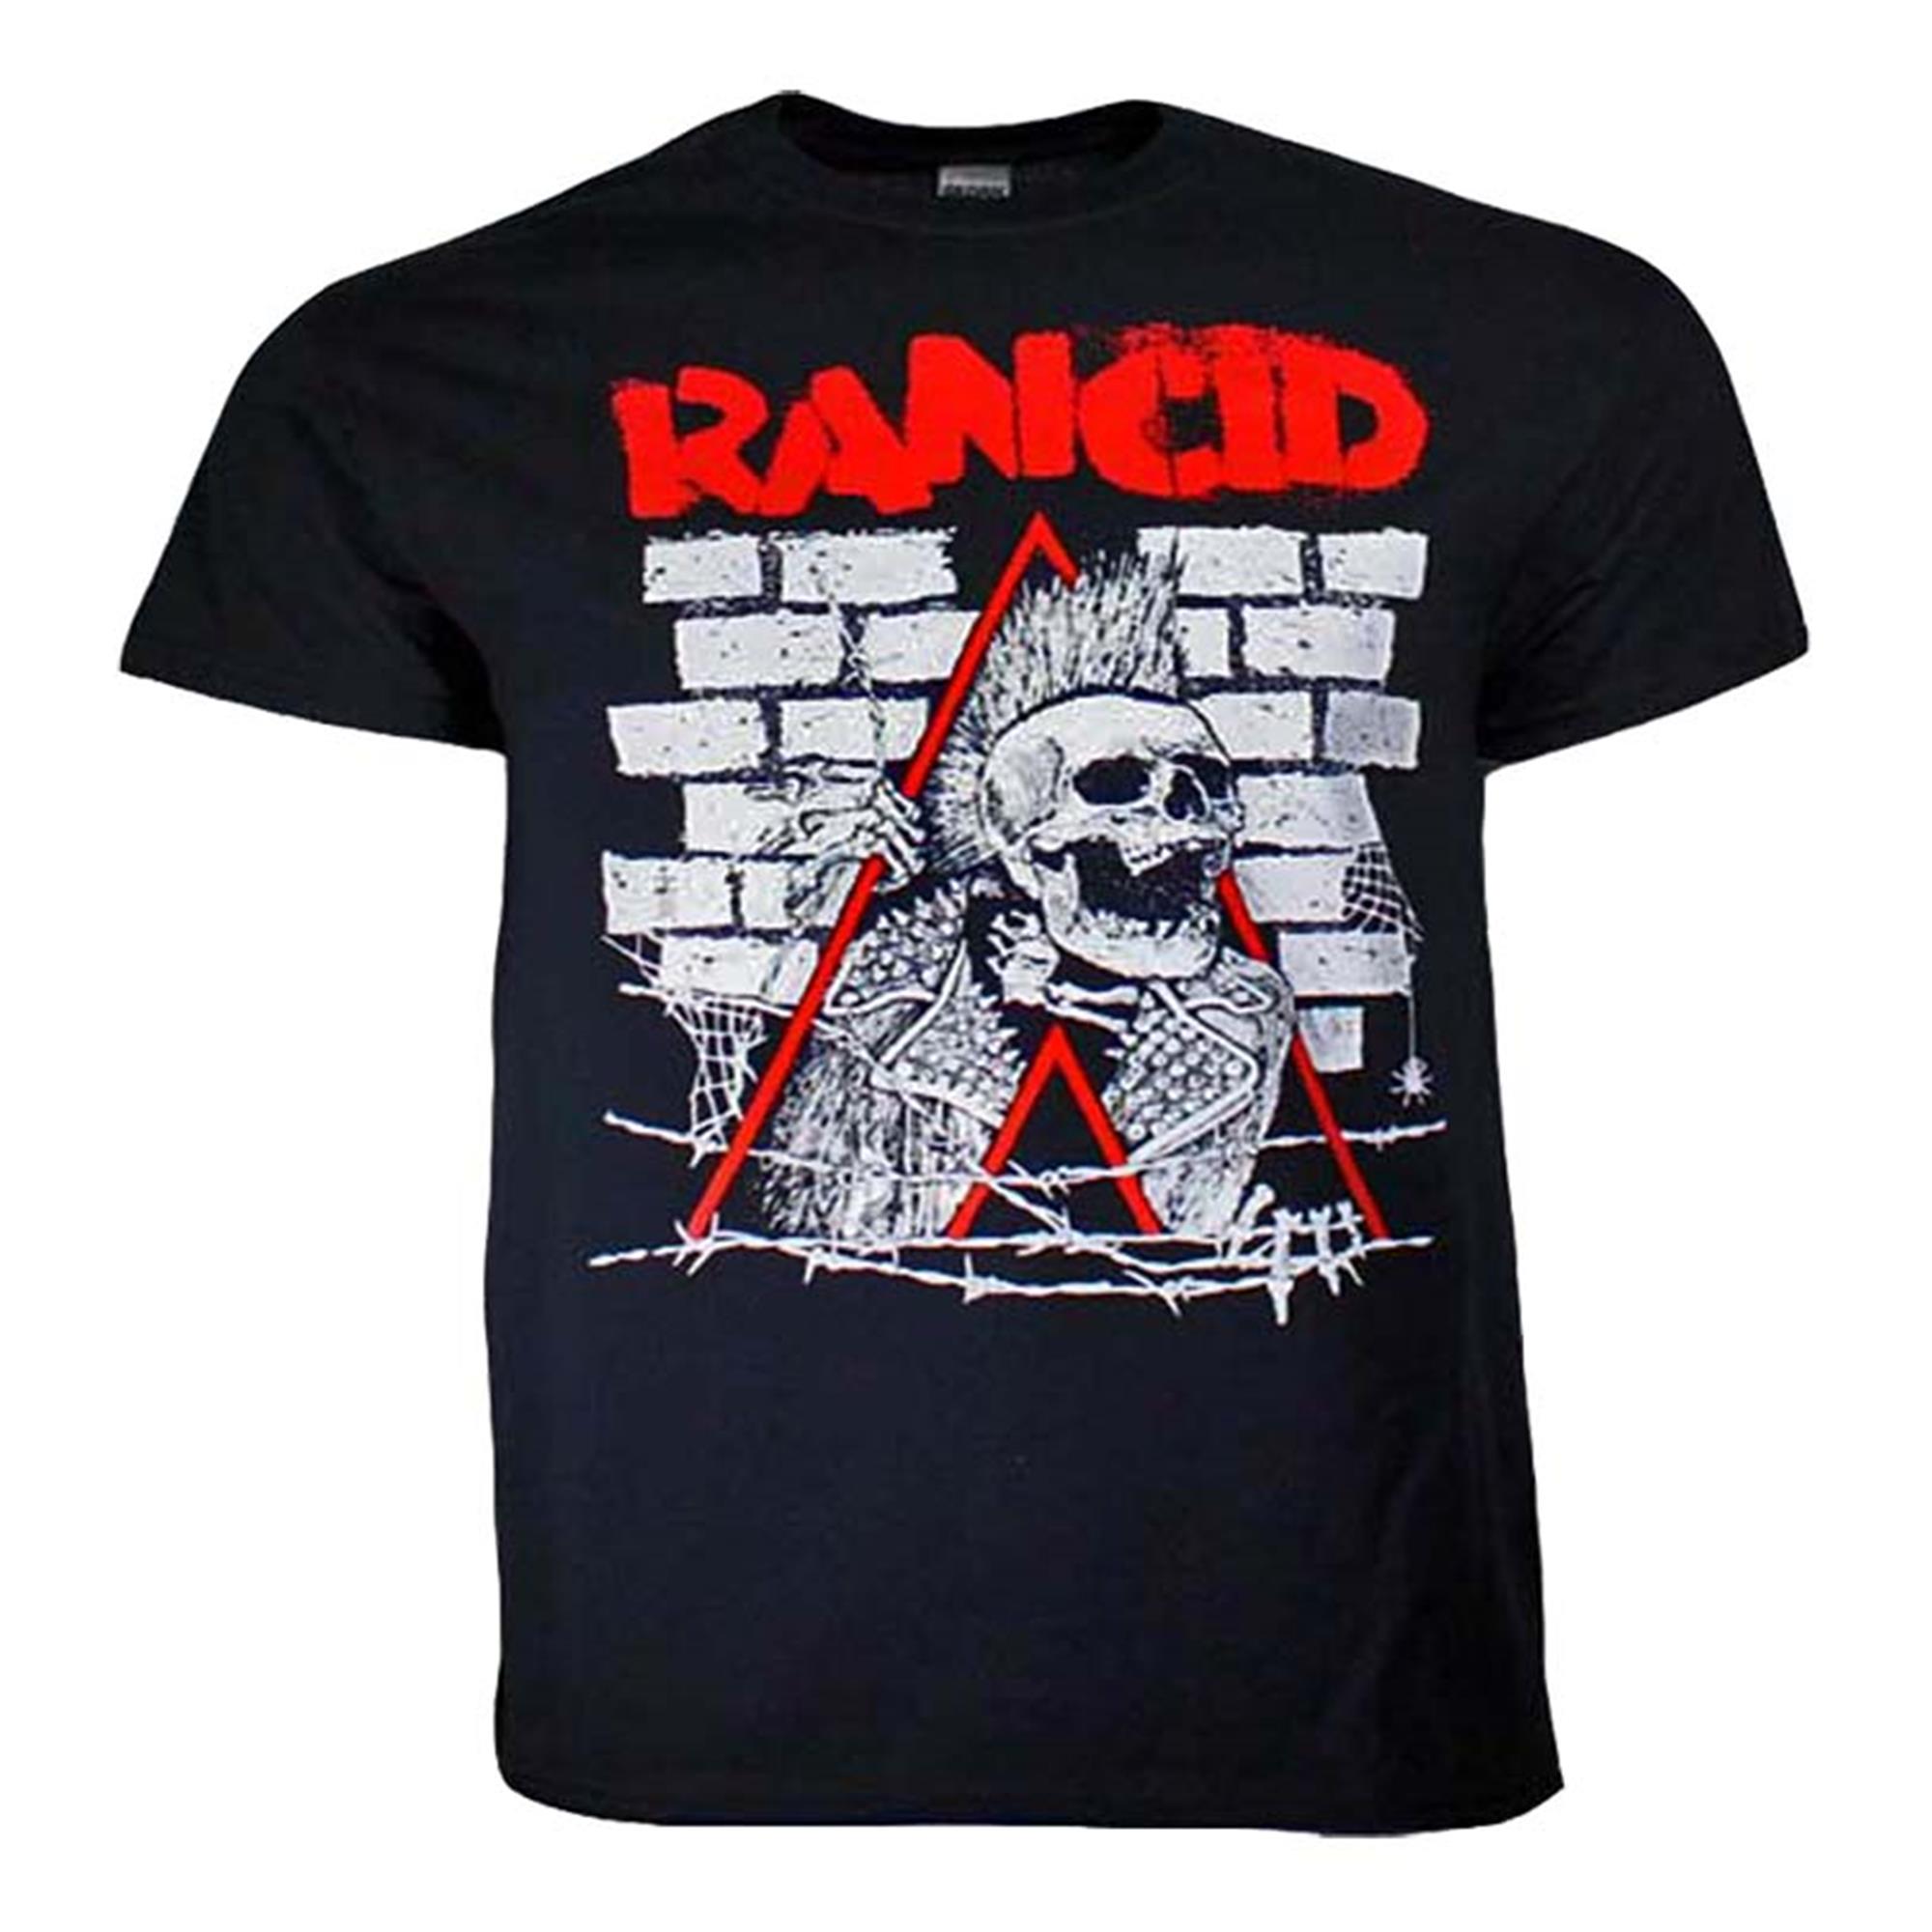 Rancid Crust Skele-Tim Breakout T-Shirt